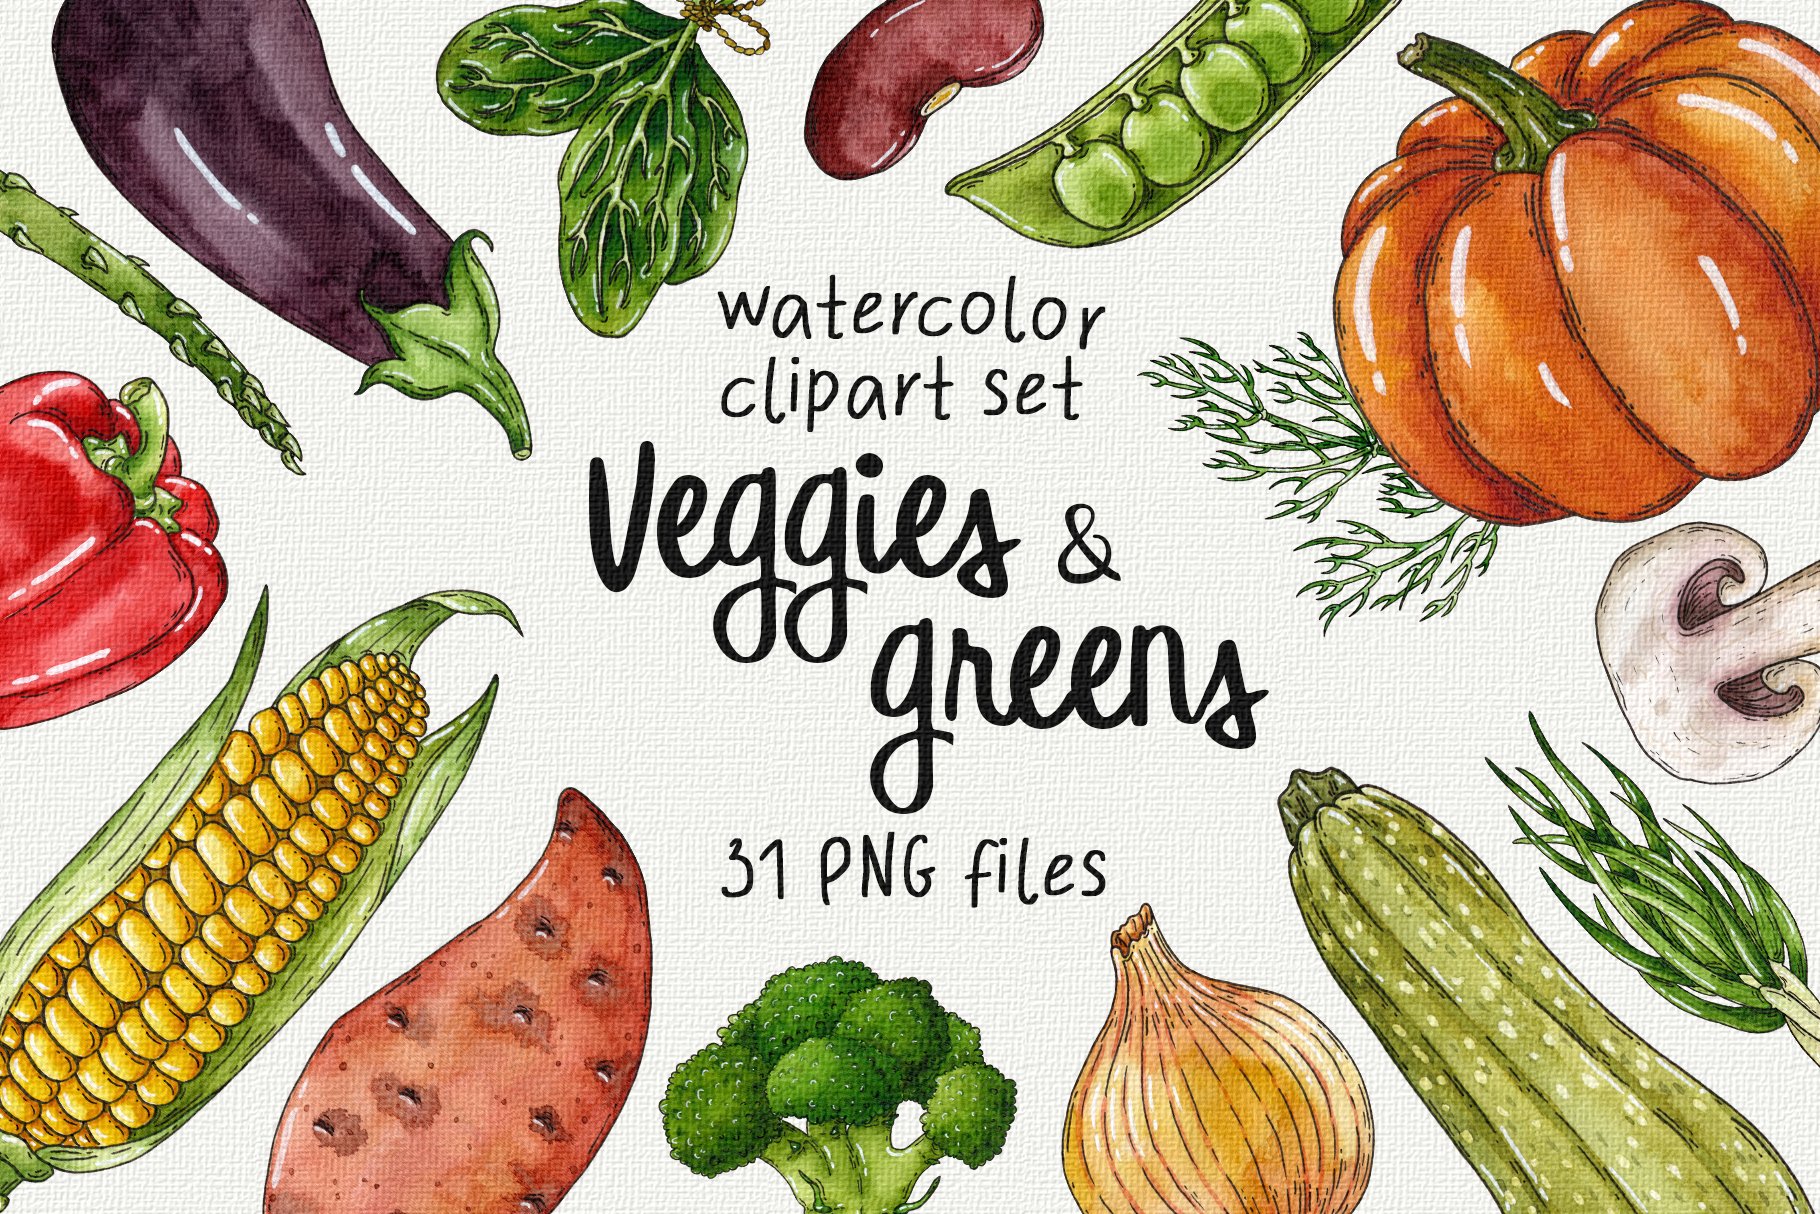 Veggies & greens watercolor clipart cover image.